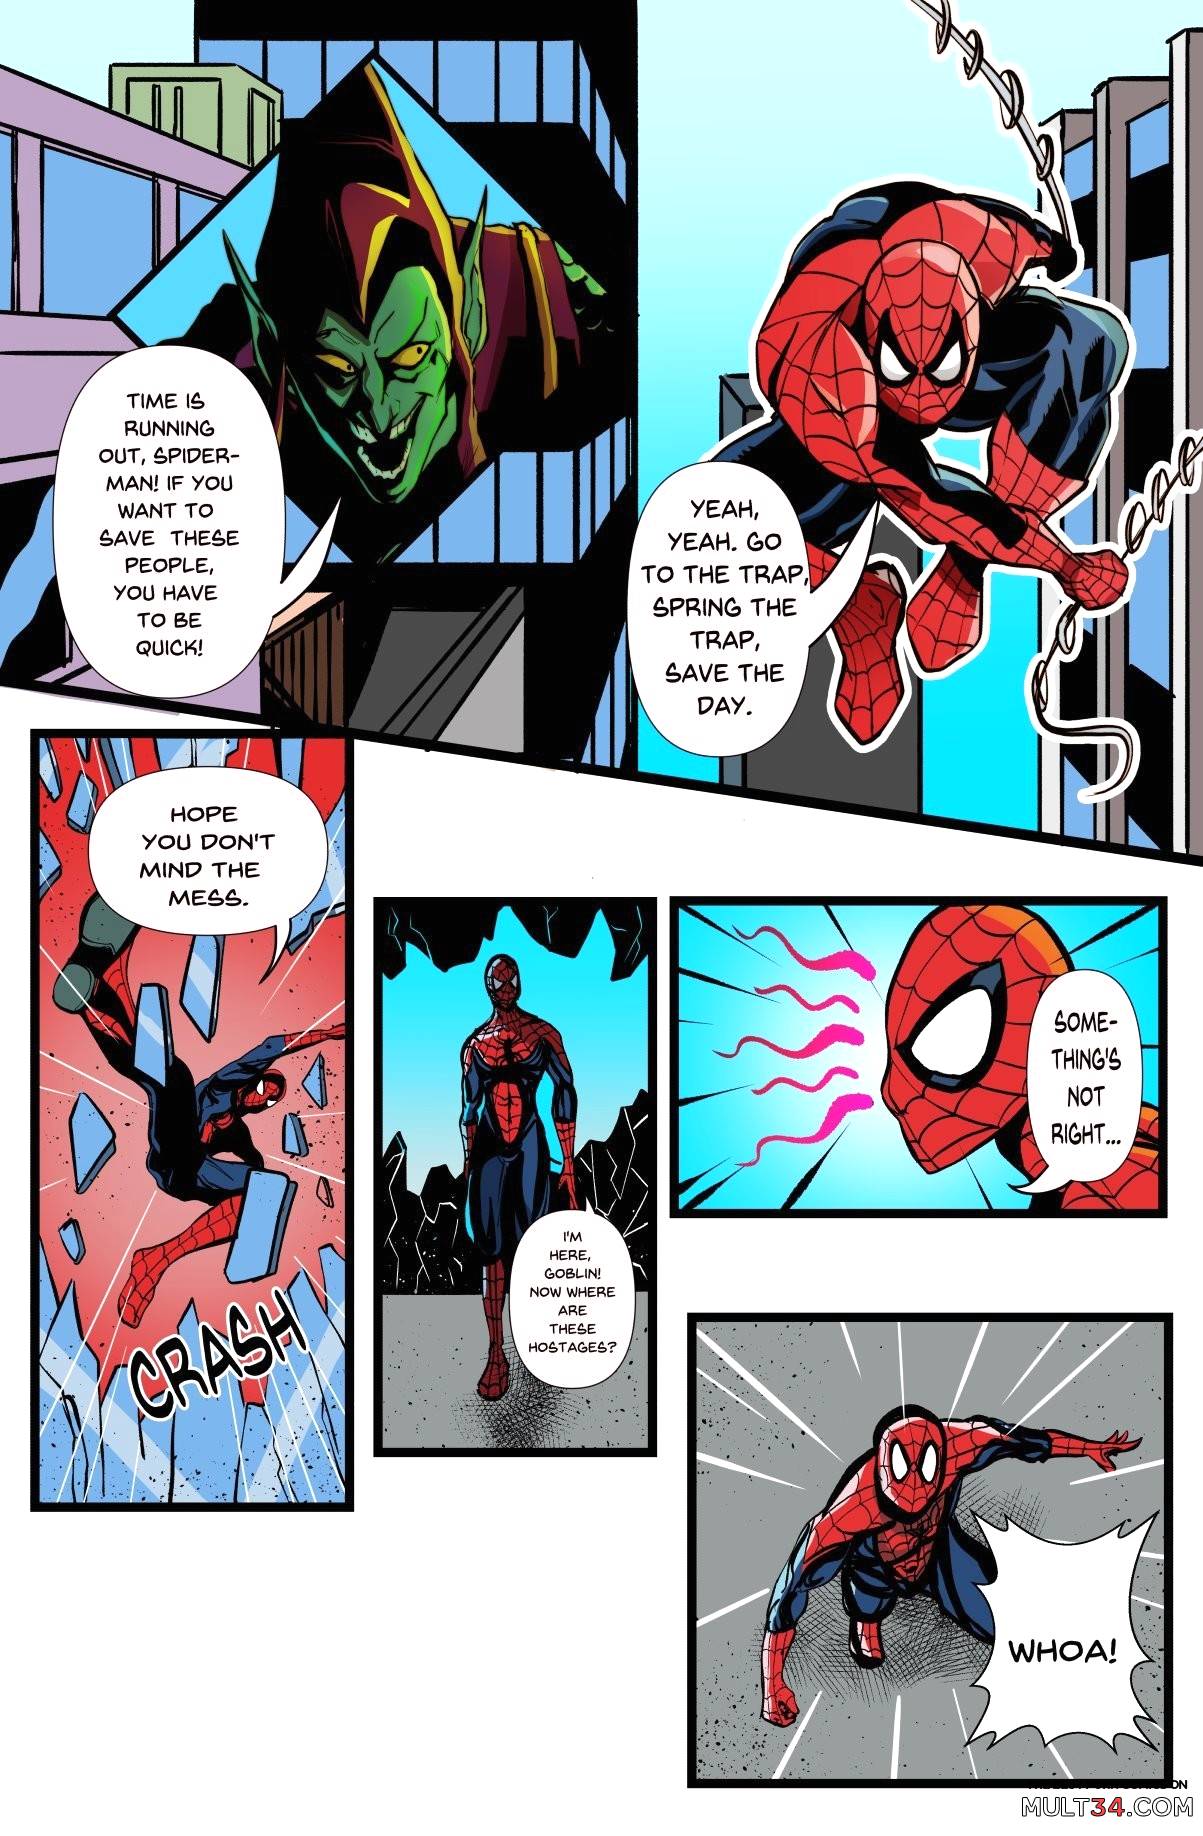 Spider-Man: No Way Male page 2